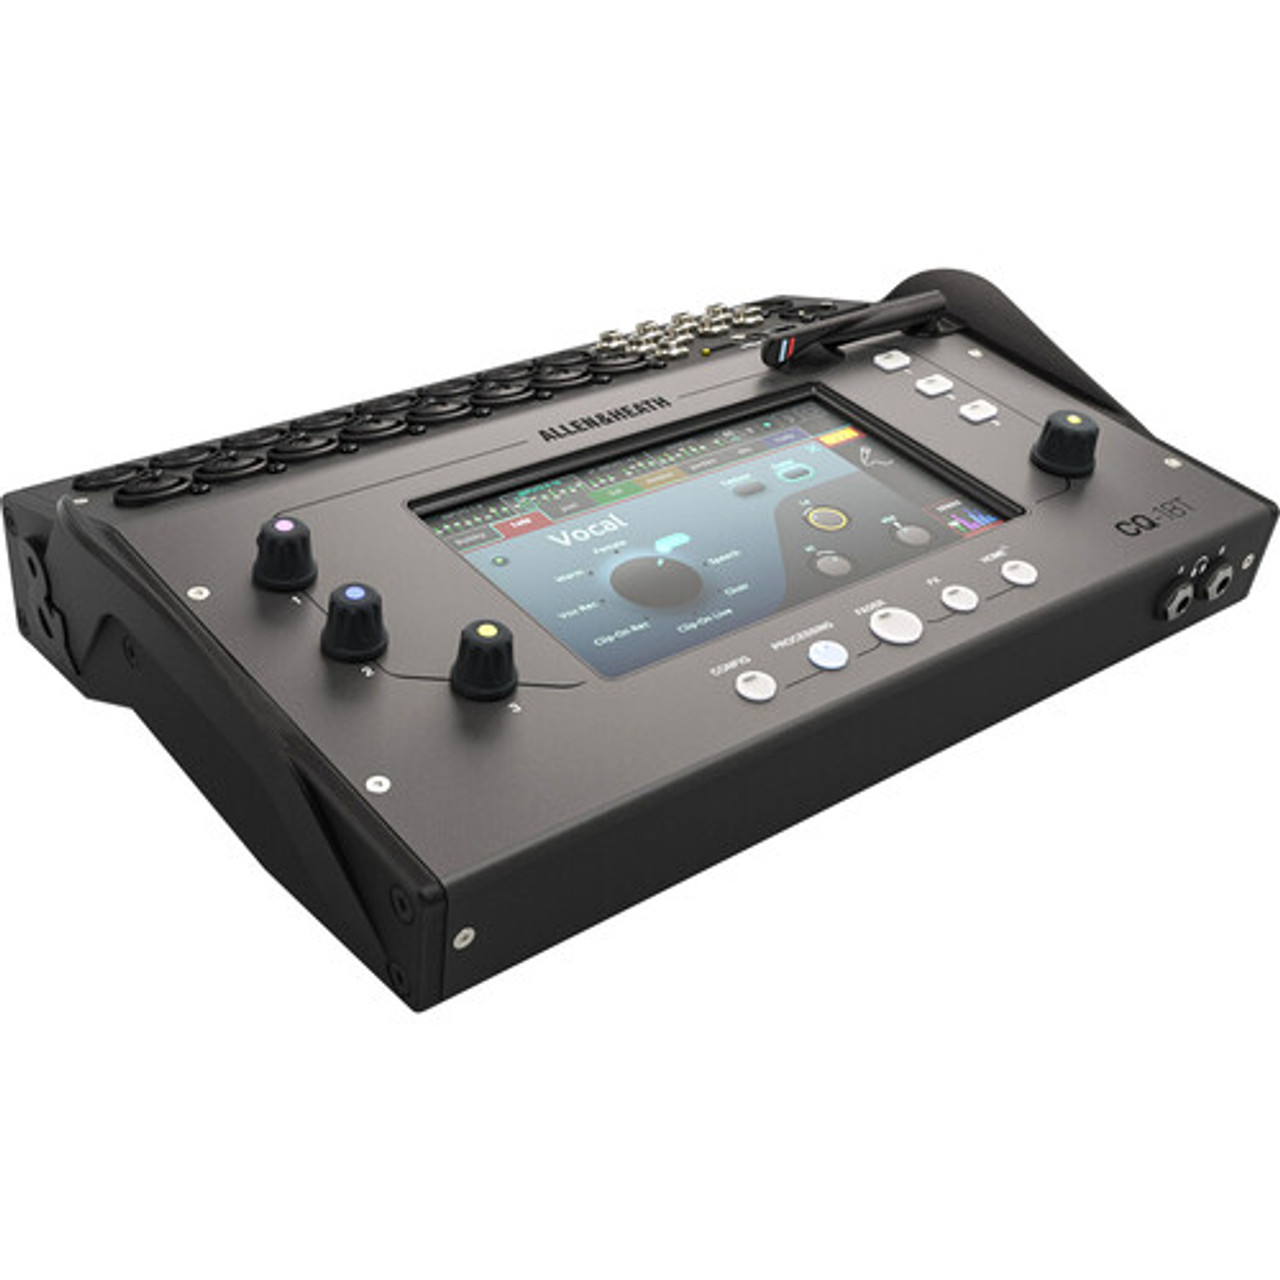  Allen & Heath AH-CQ18T Compact 18-Channel Digital Mixer with Touchscreen (AH-CQ18T)